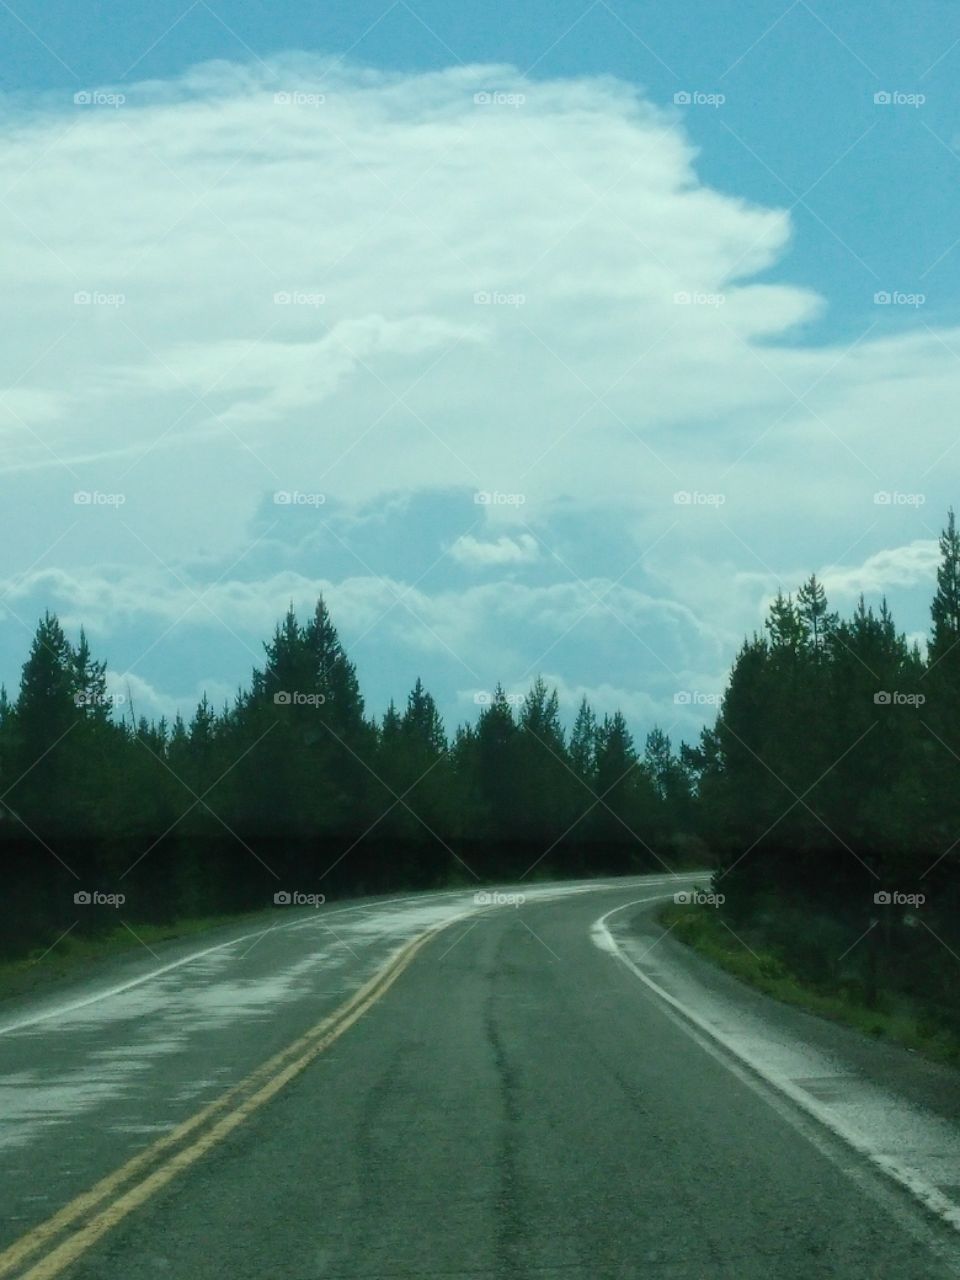 Roads of Yellowstone